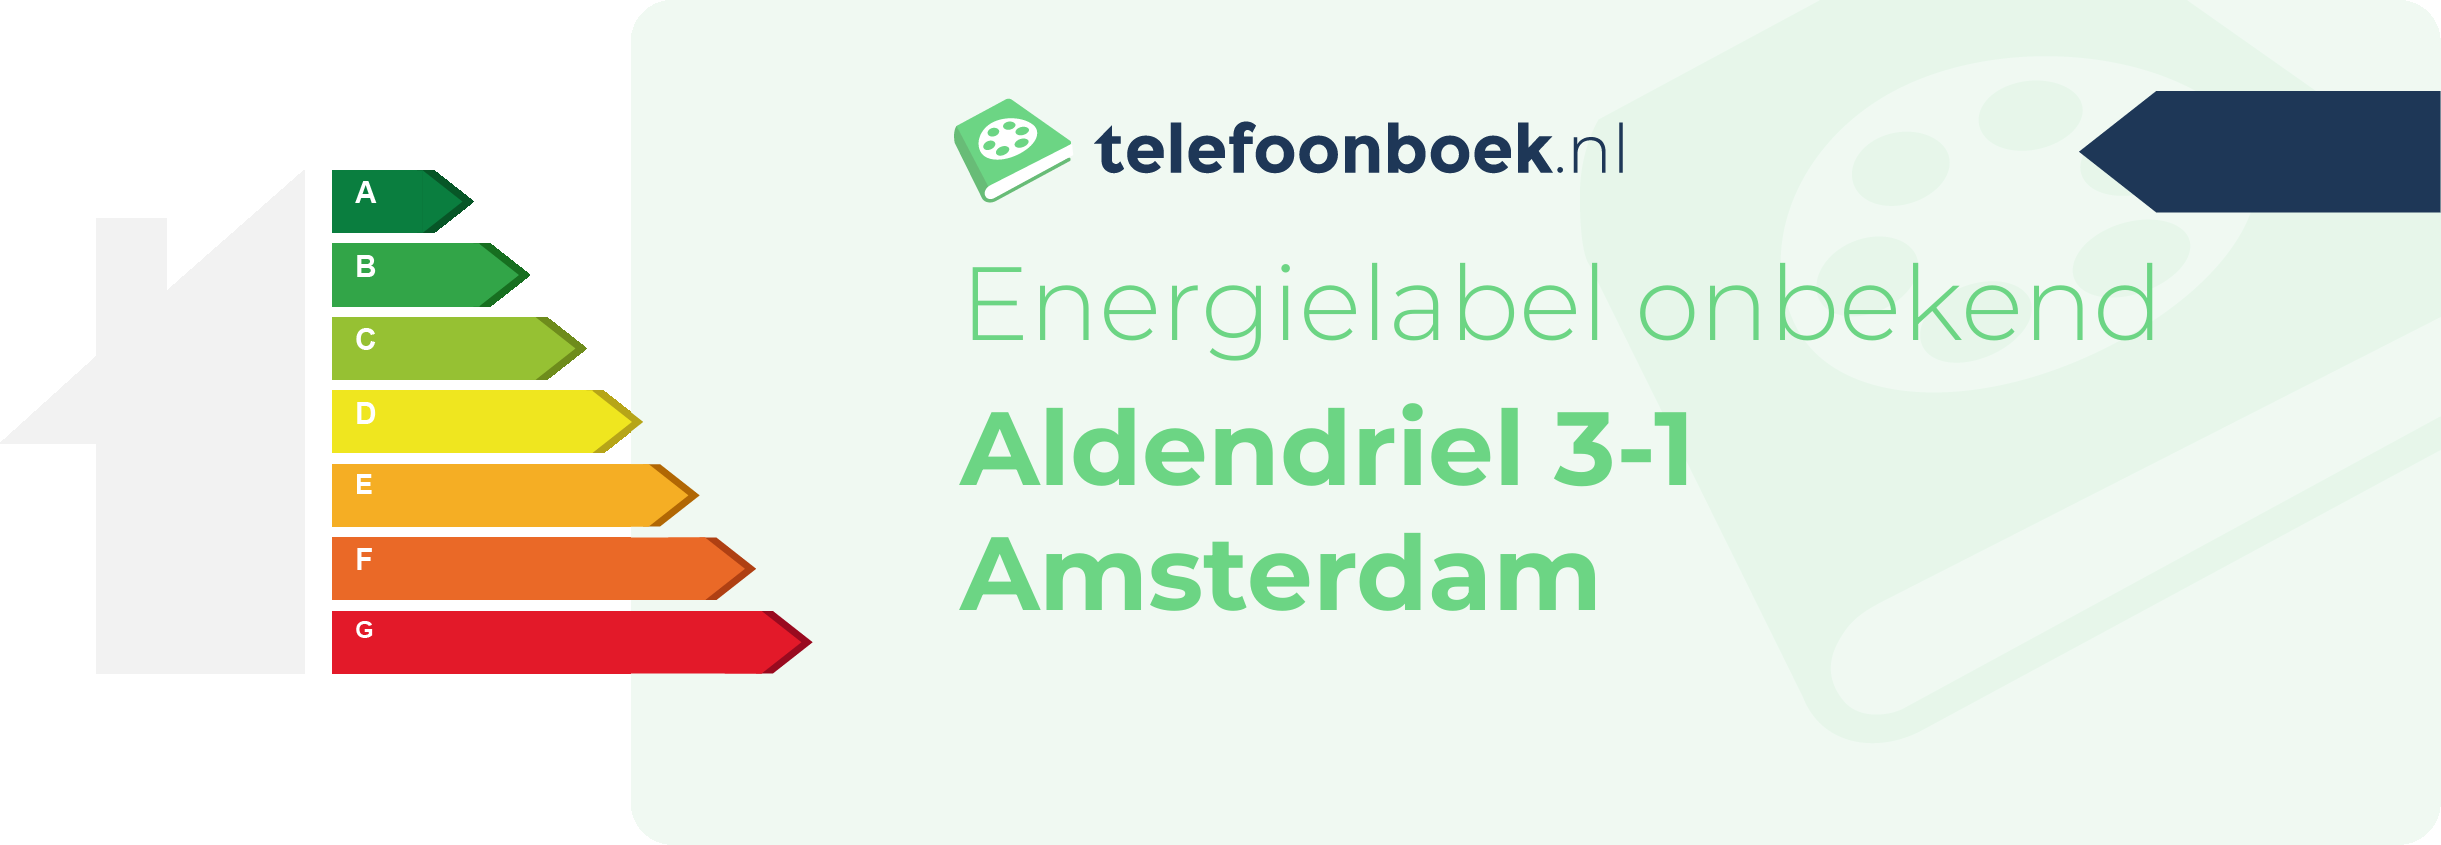 Energielabel Aldendriel 3-1 Amsterdam